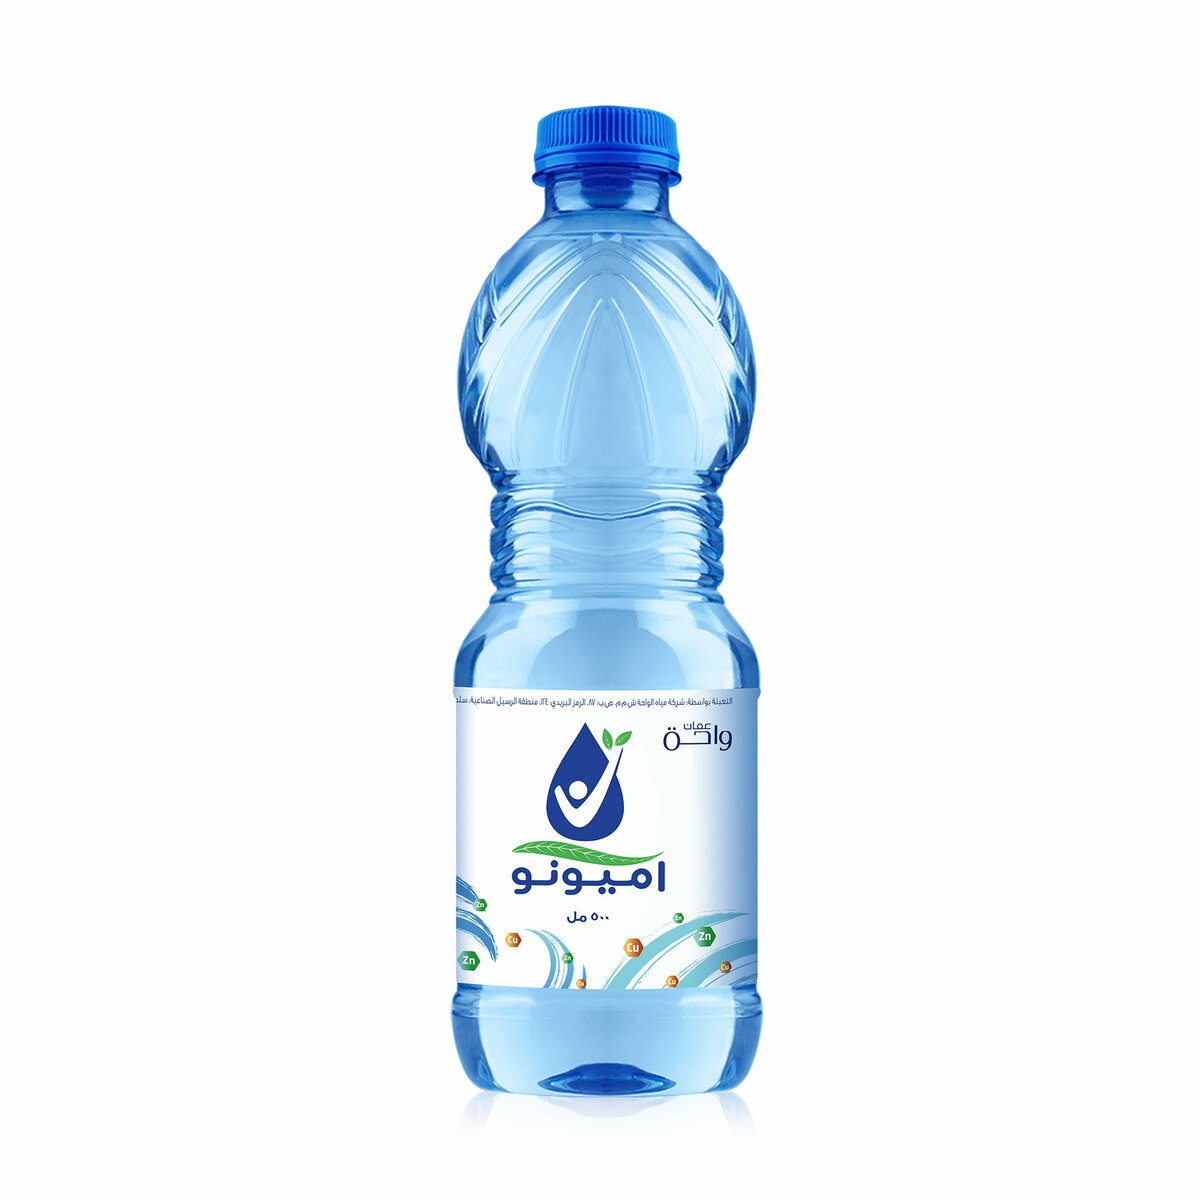 Oman Oasis Immuno Water 500ml